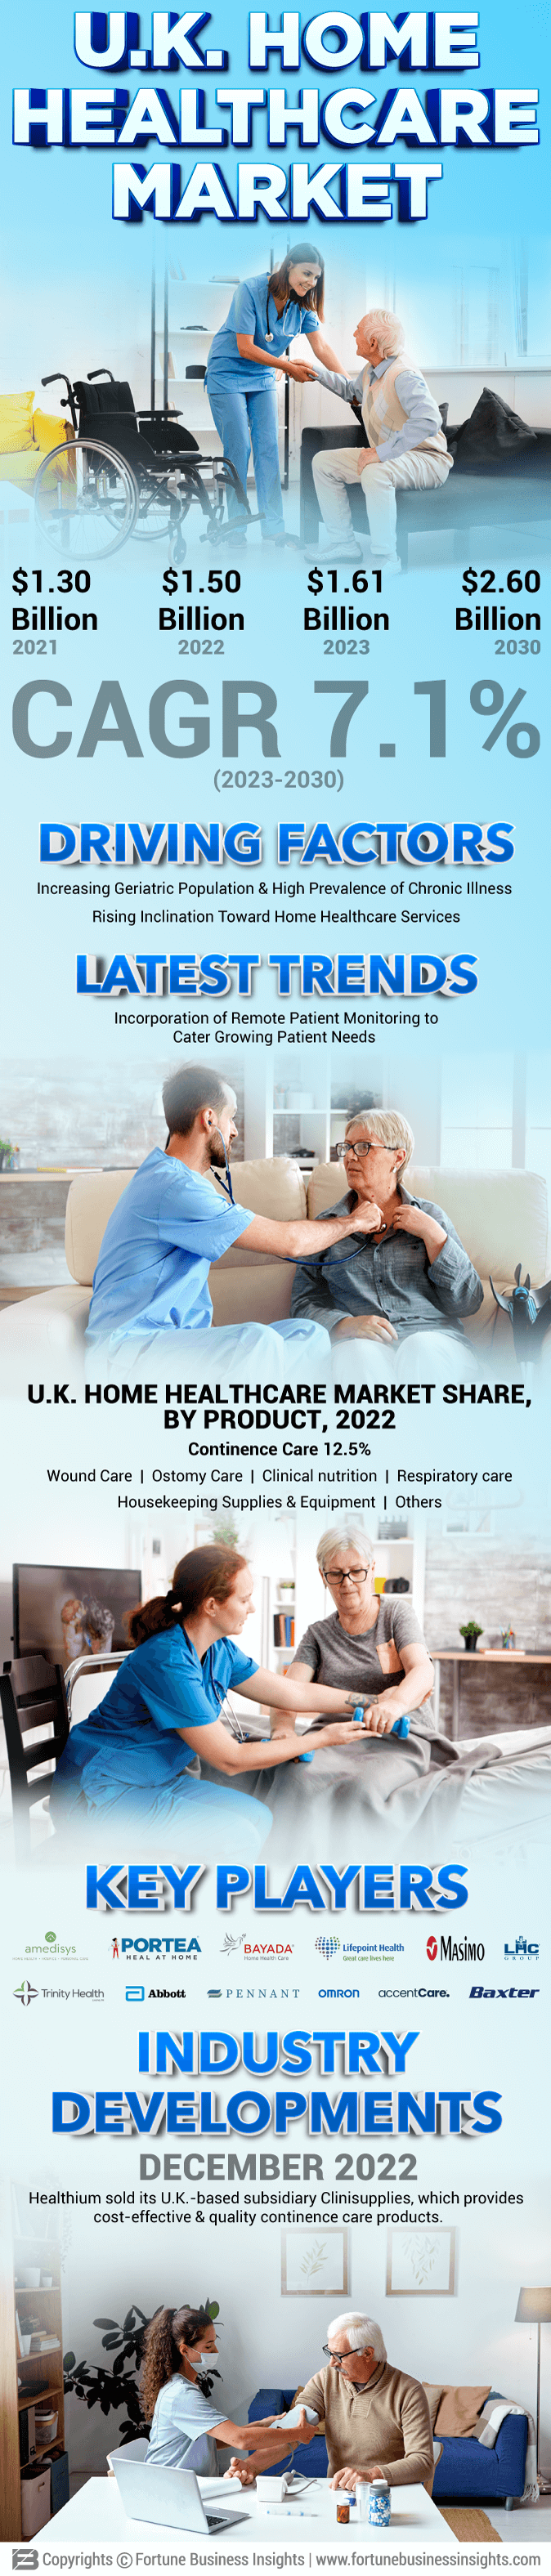 U.K. Home Healthcare Market